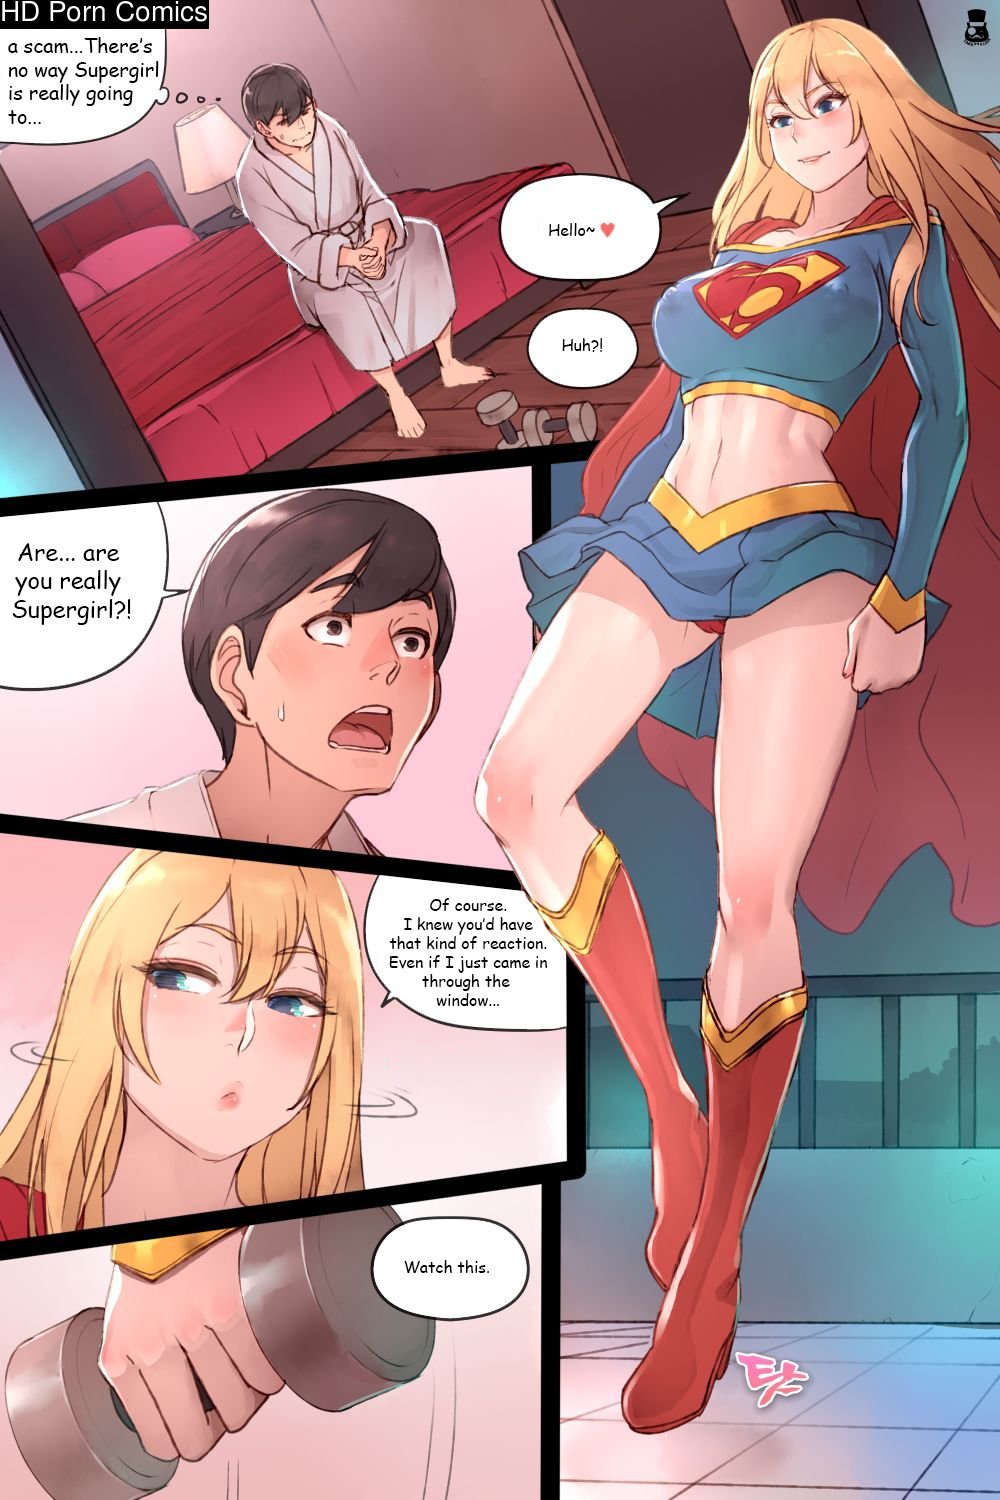 Supergirl Femdom Porn - Supergirl's Secret Service comic porn - HD Porn Comics